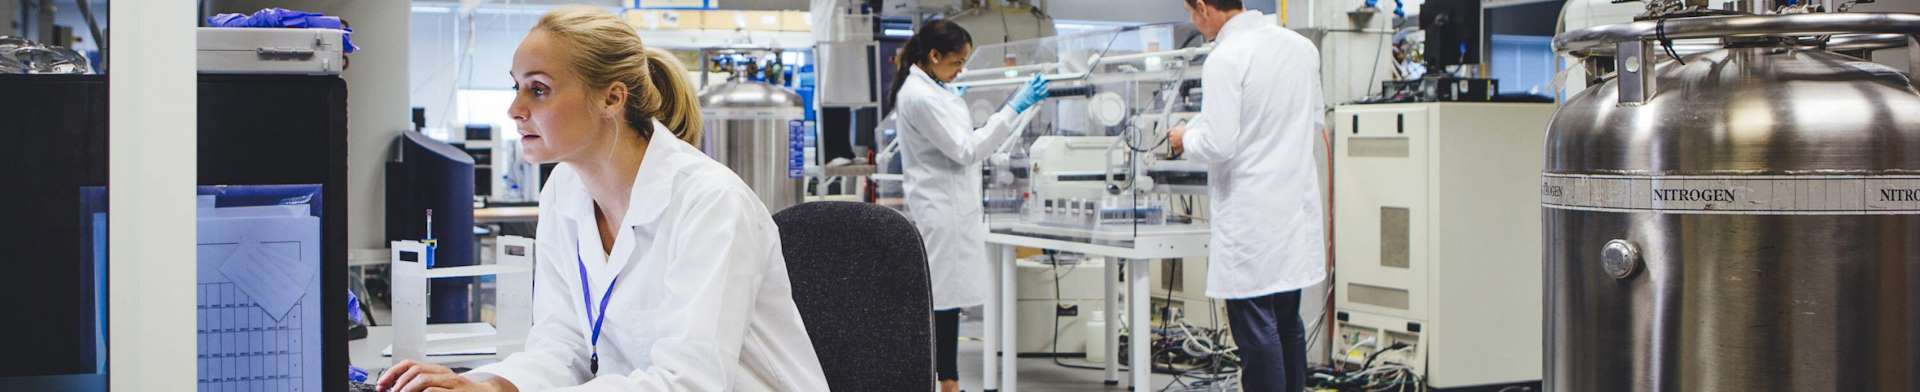 Staff working in laboratory